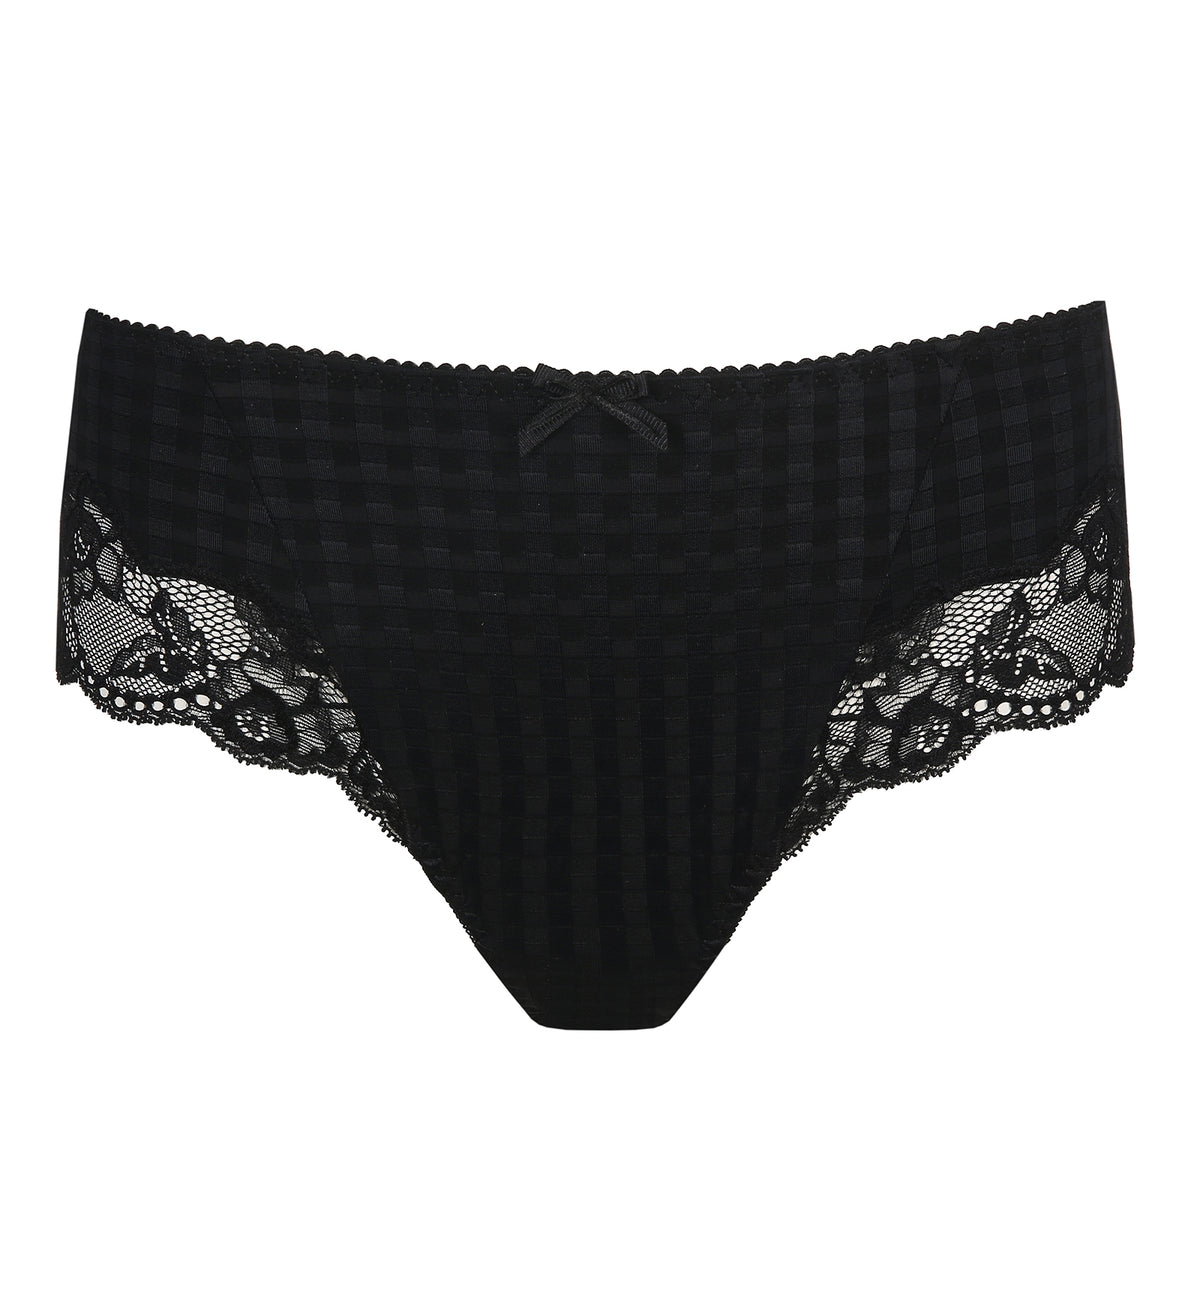 PrimaDonna Madison Matching Hotpants Panty (0562127),XS,Black - Black,XS